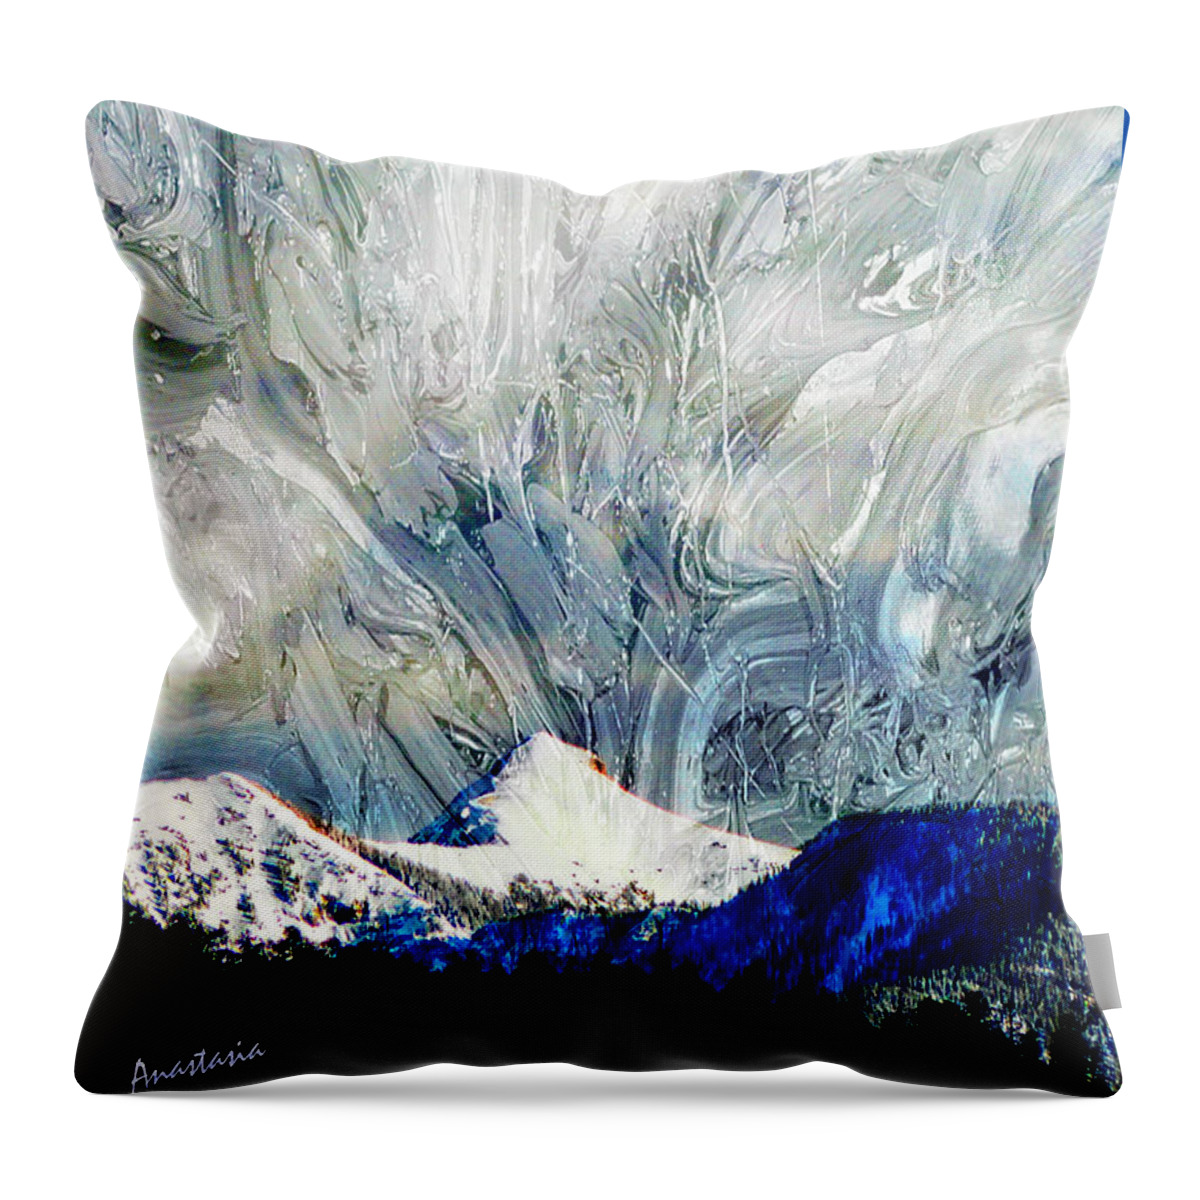 Mountain Throw Pillow featuring the painting Sheep's Head Peak April Snow II by Anastasia Savage Ealy